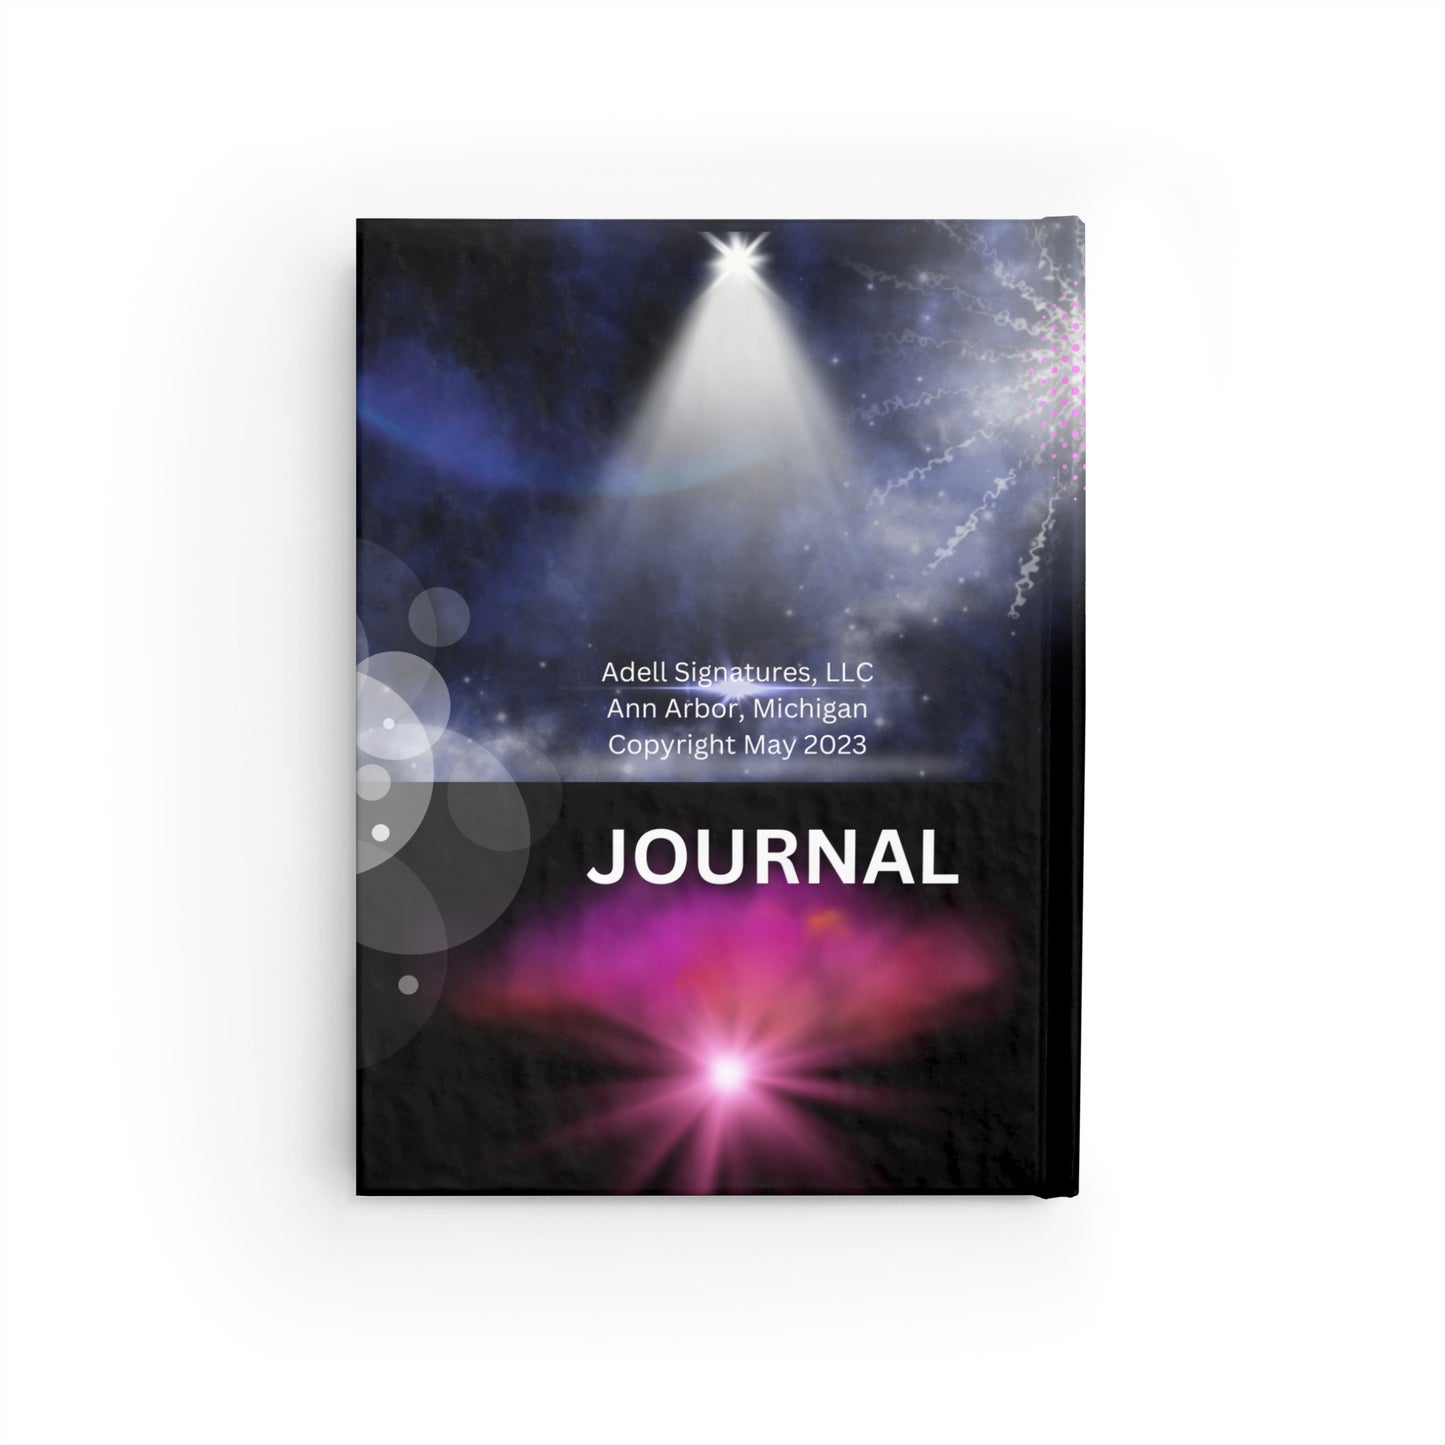 Enchanted Zeal™ "Gnosis Divine Knowledge" - Journal - Blank